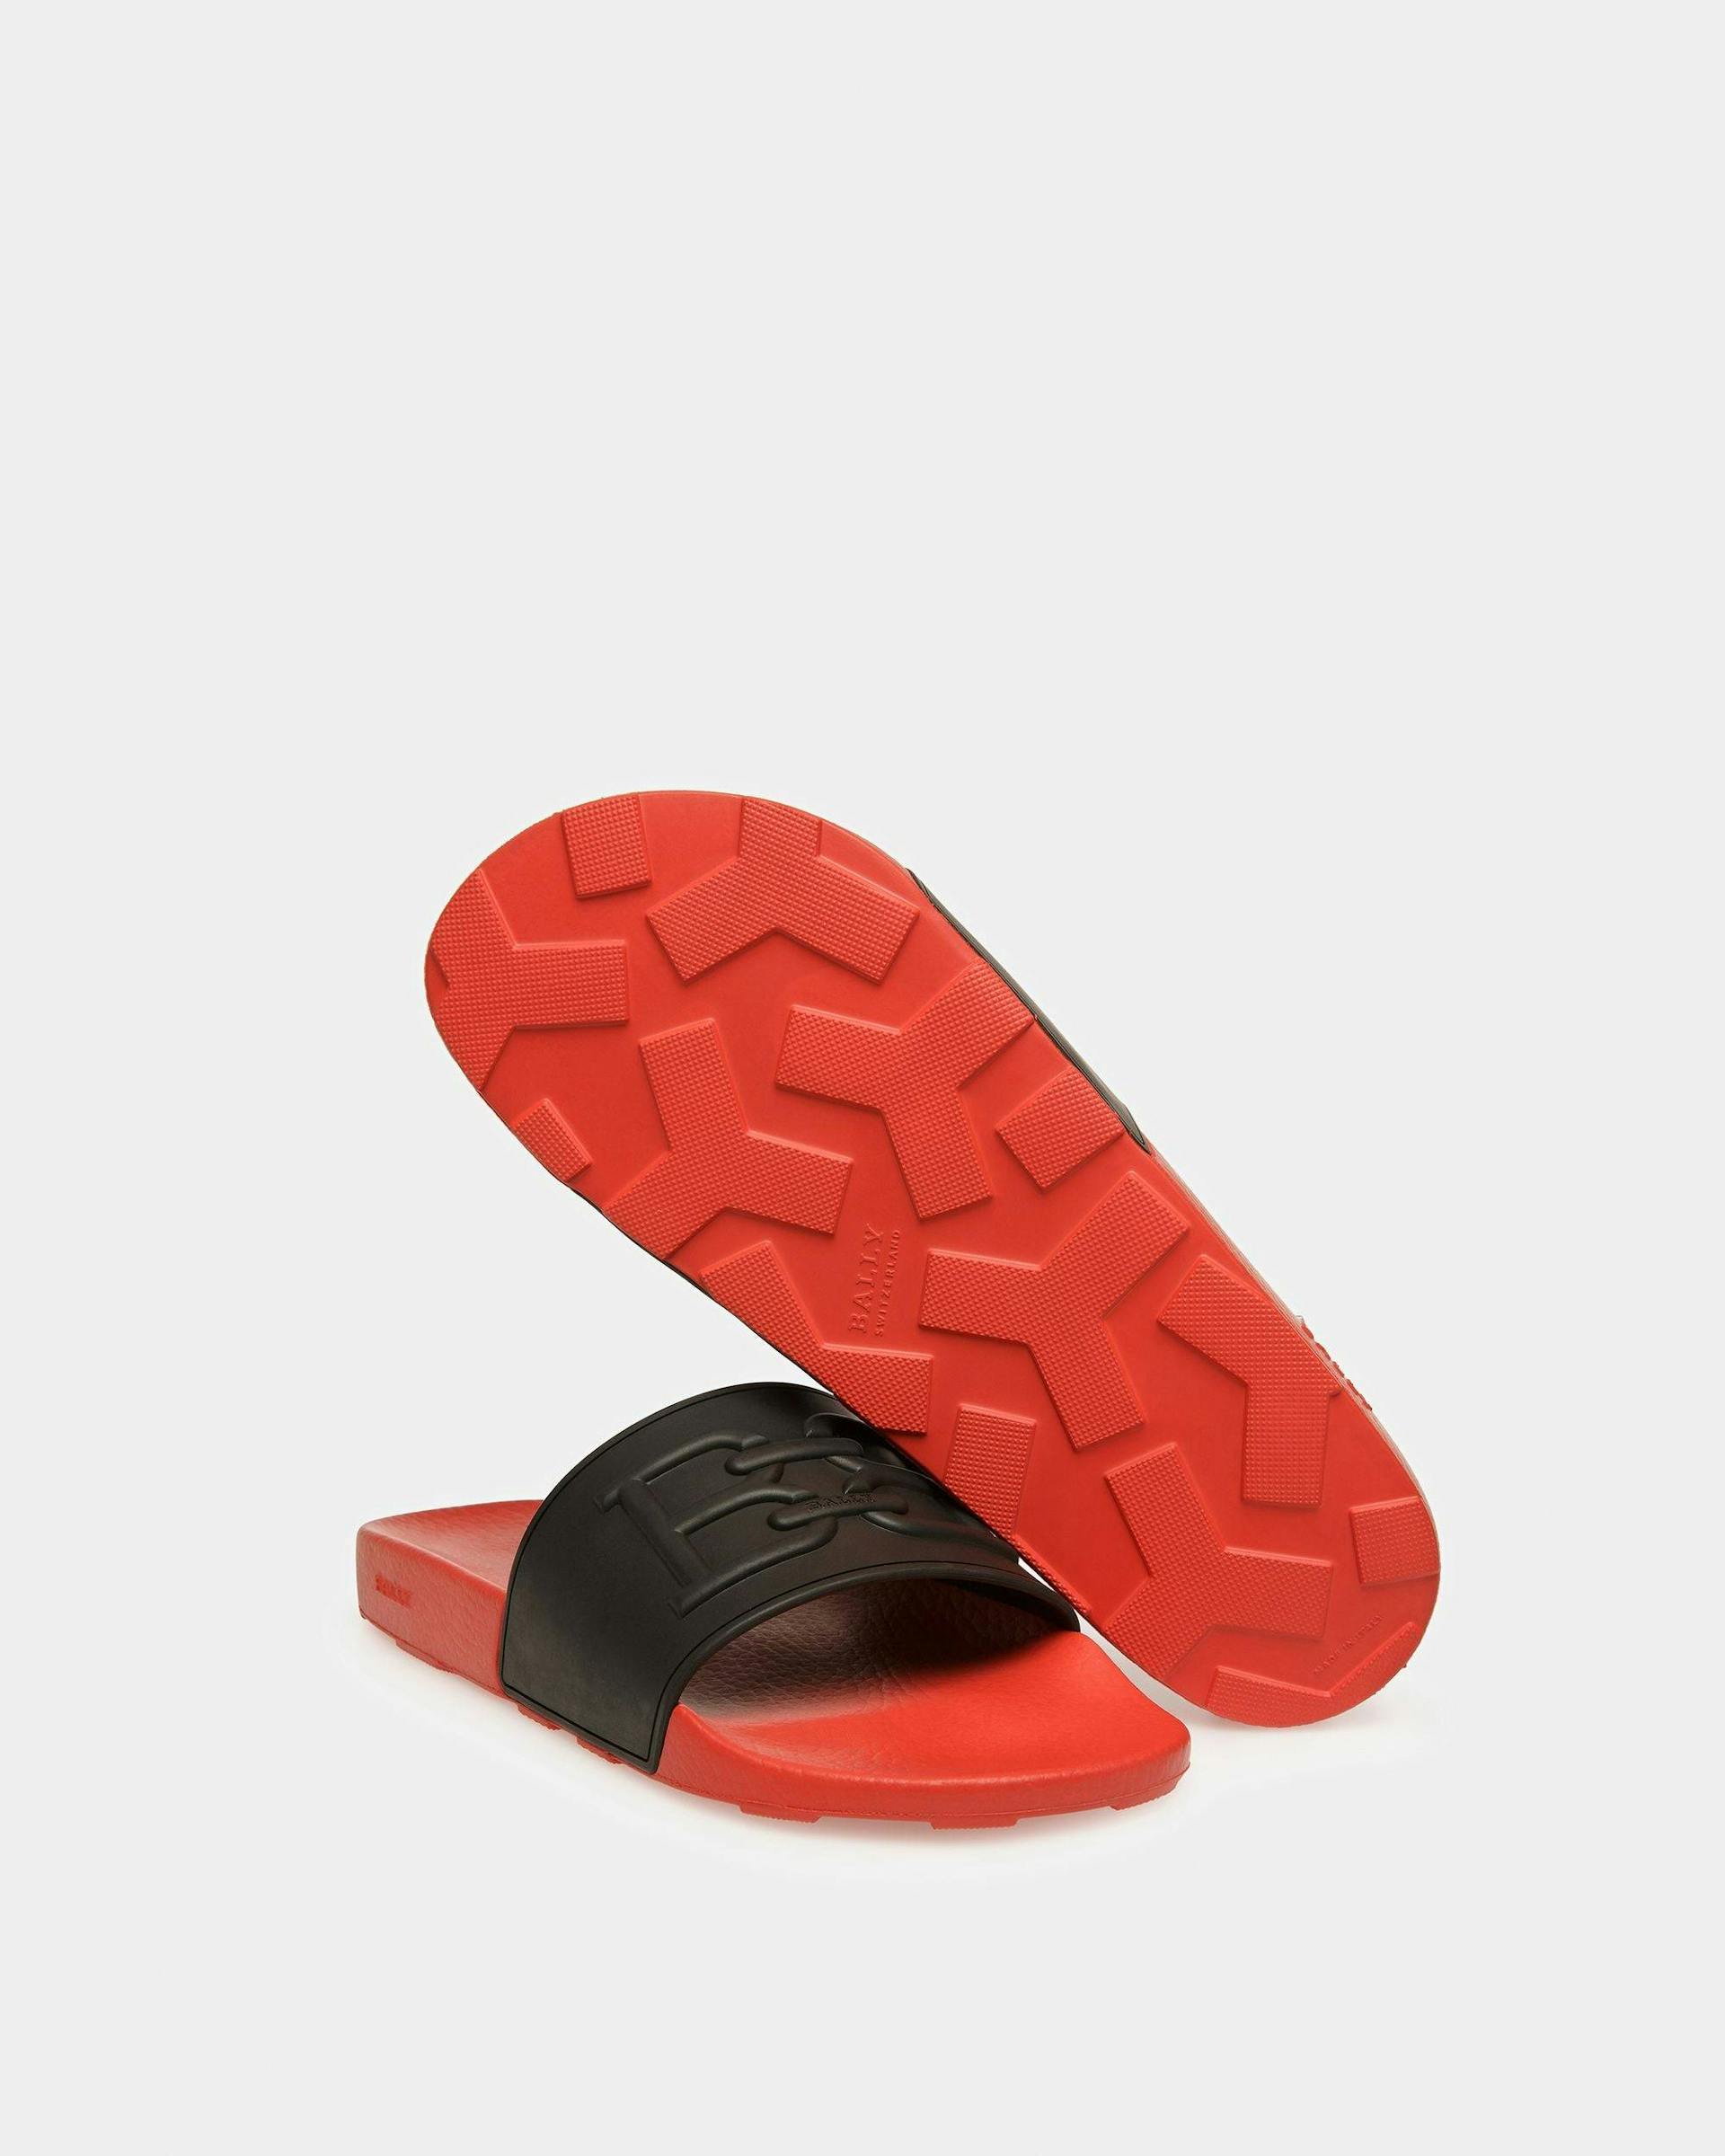 Scotty Rubber Sandals In Black And Orange - Men's - Bally - 05